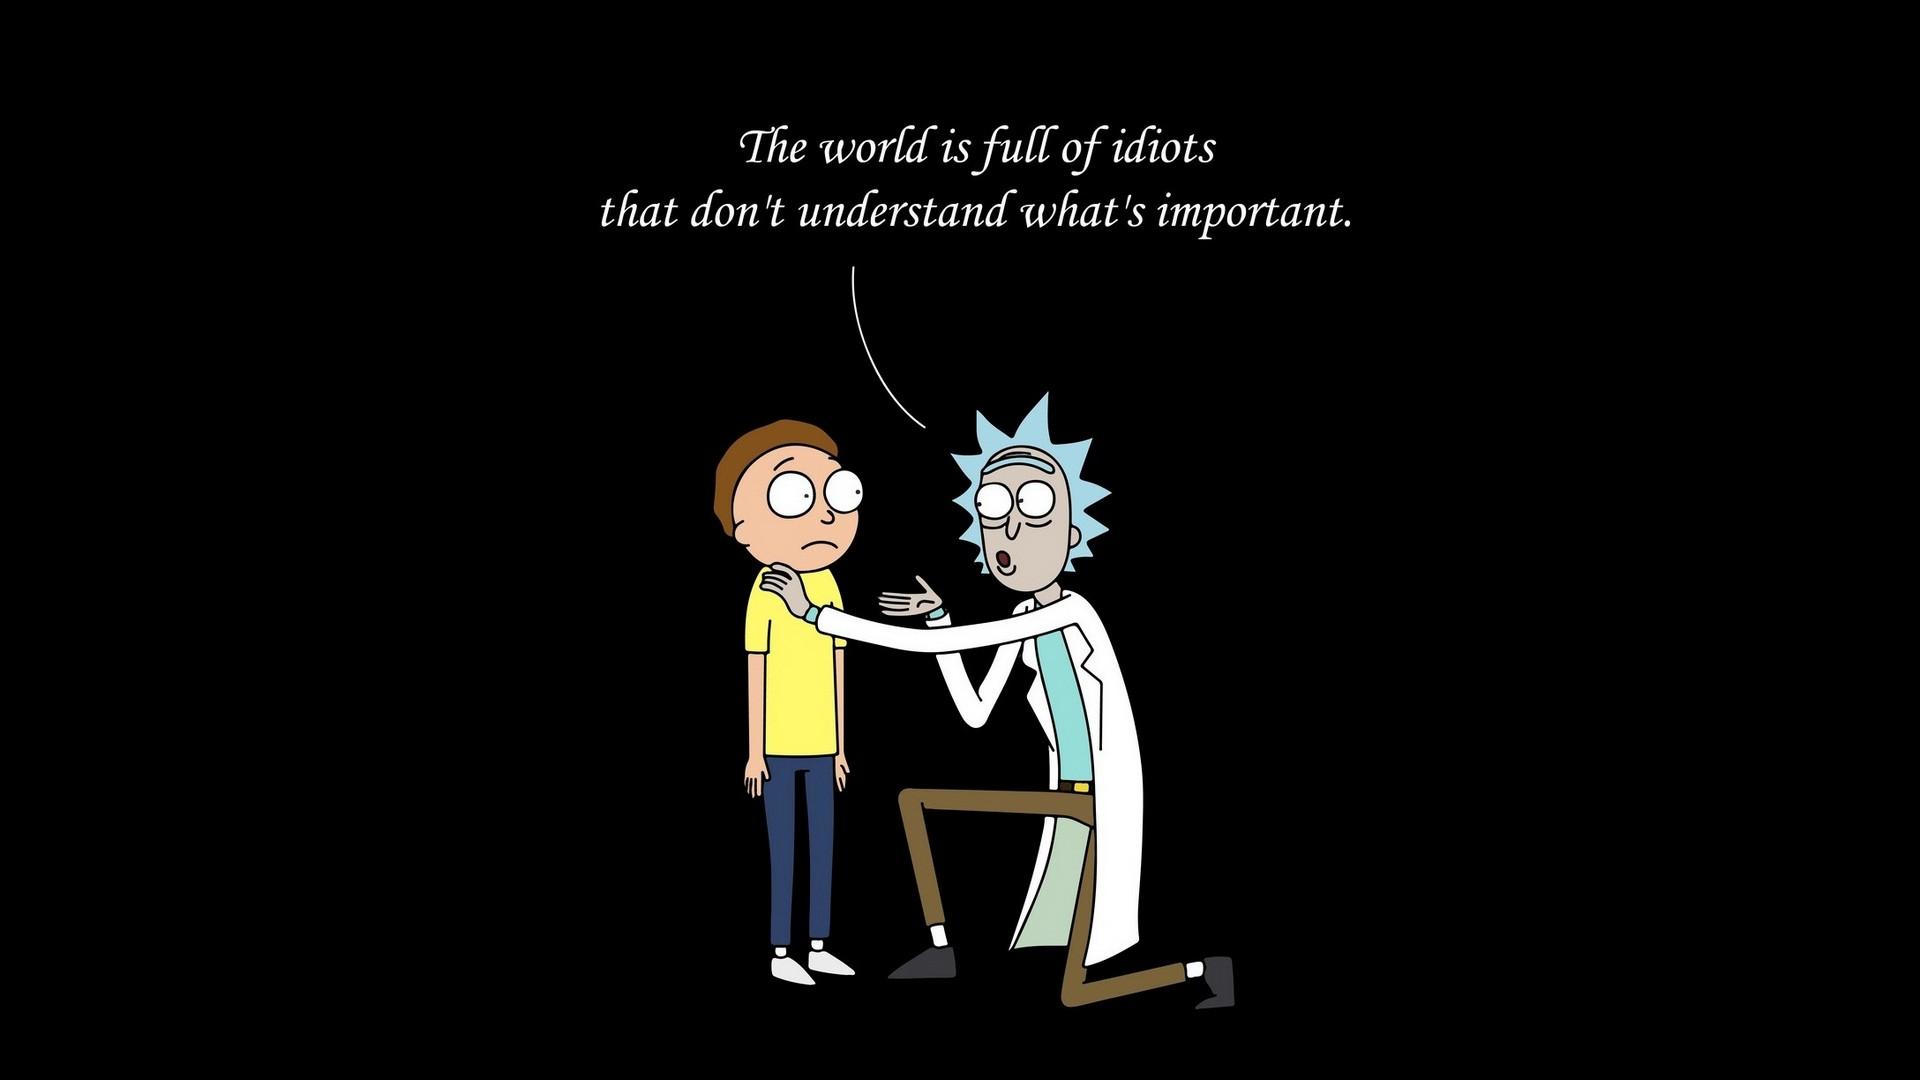 Rick and Morty Desktop Background by Toshpokerface on DeviantArt